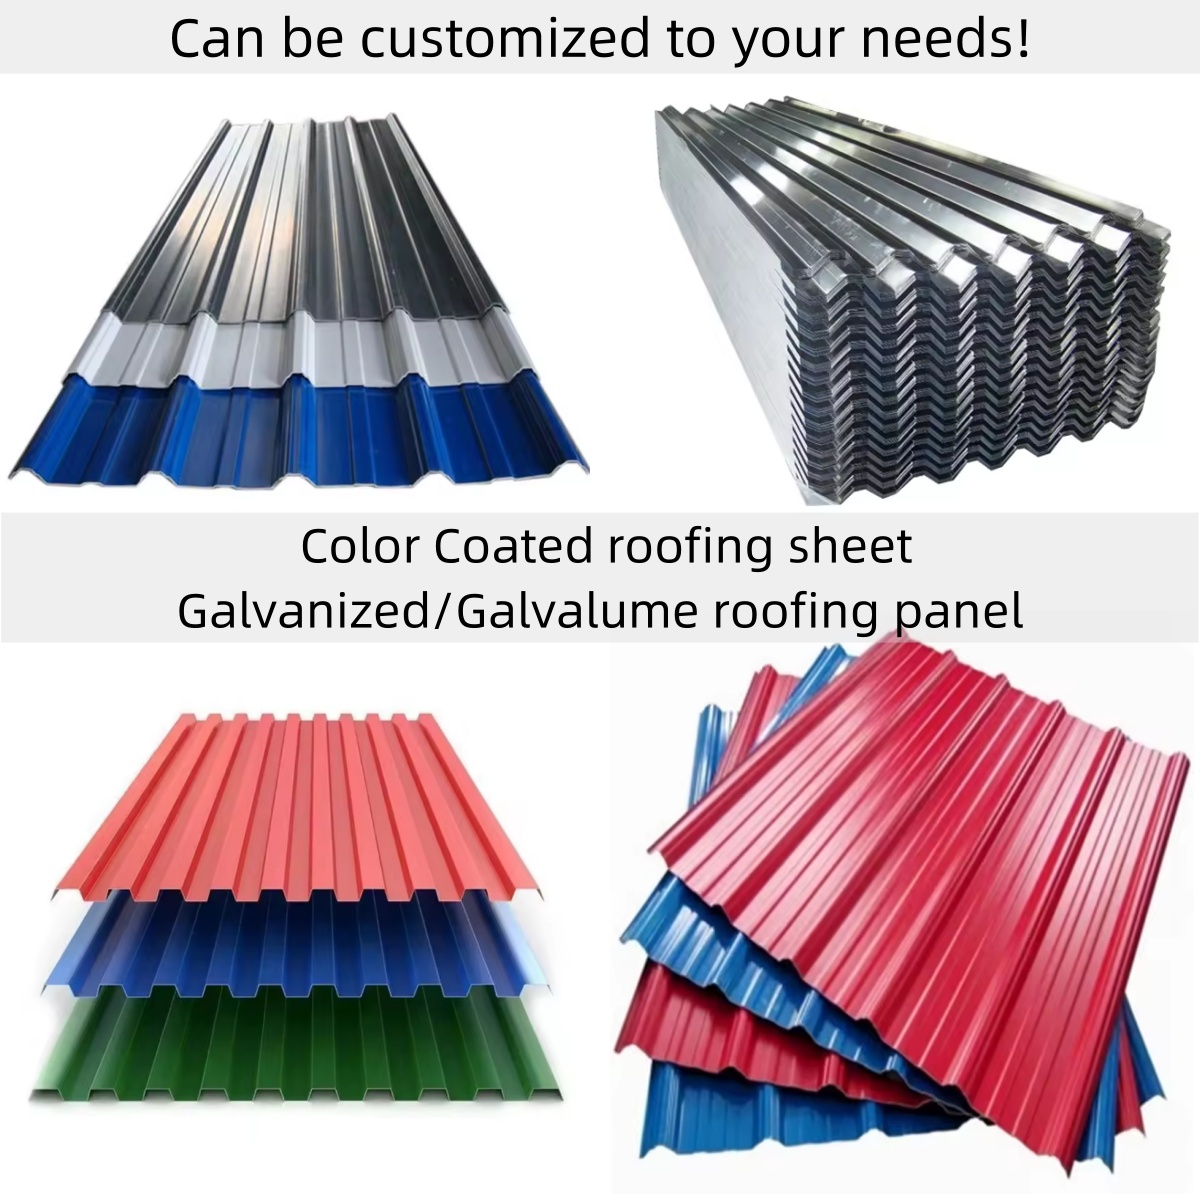 Galvanized roofing panel